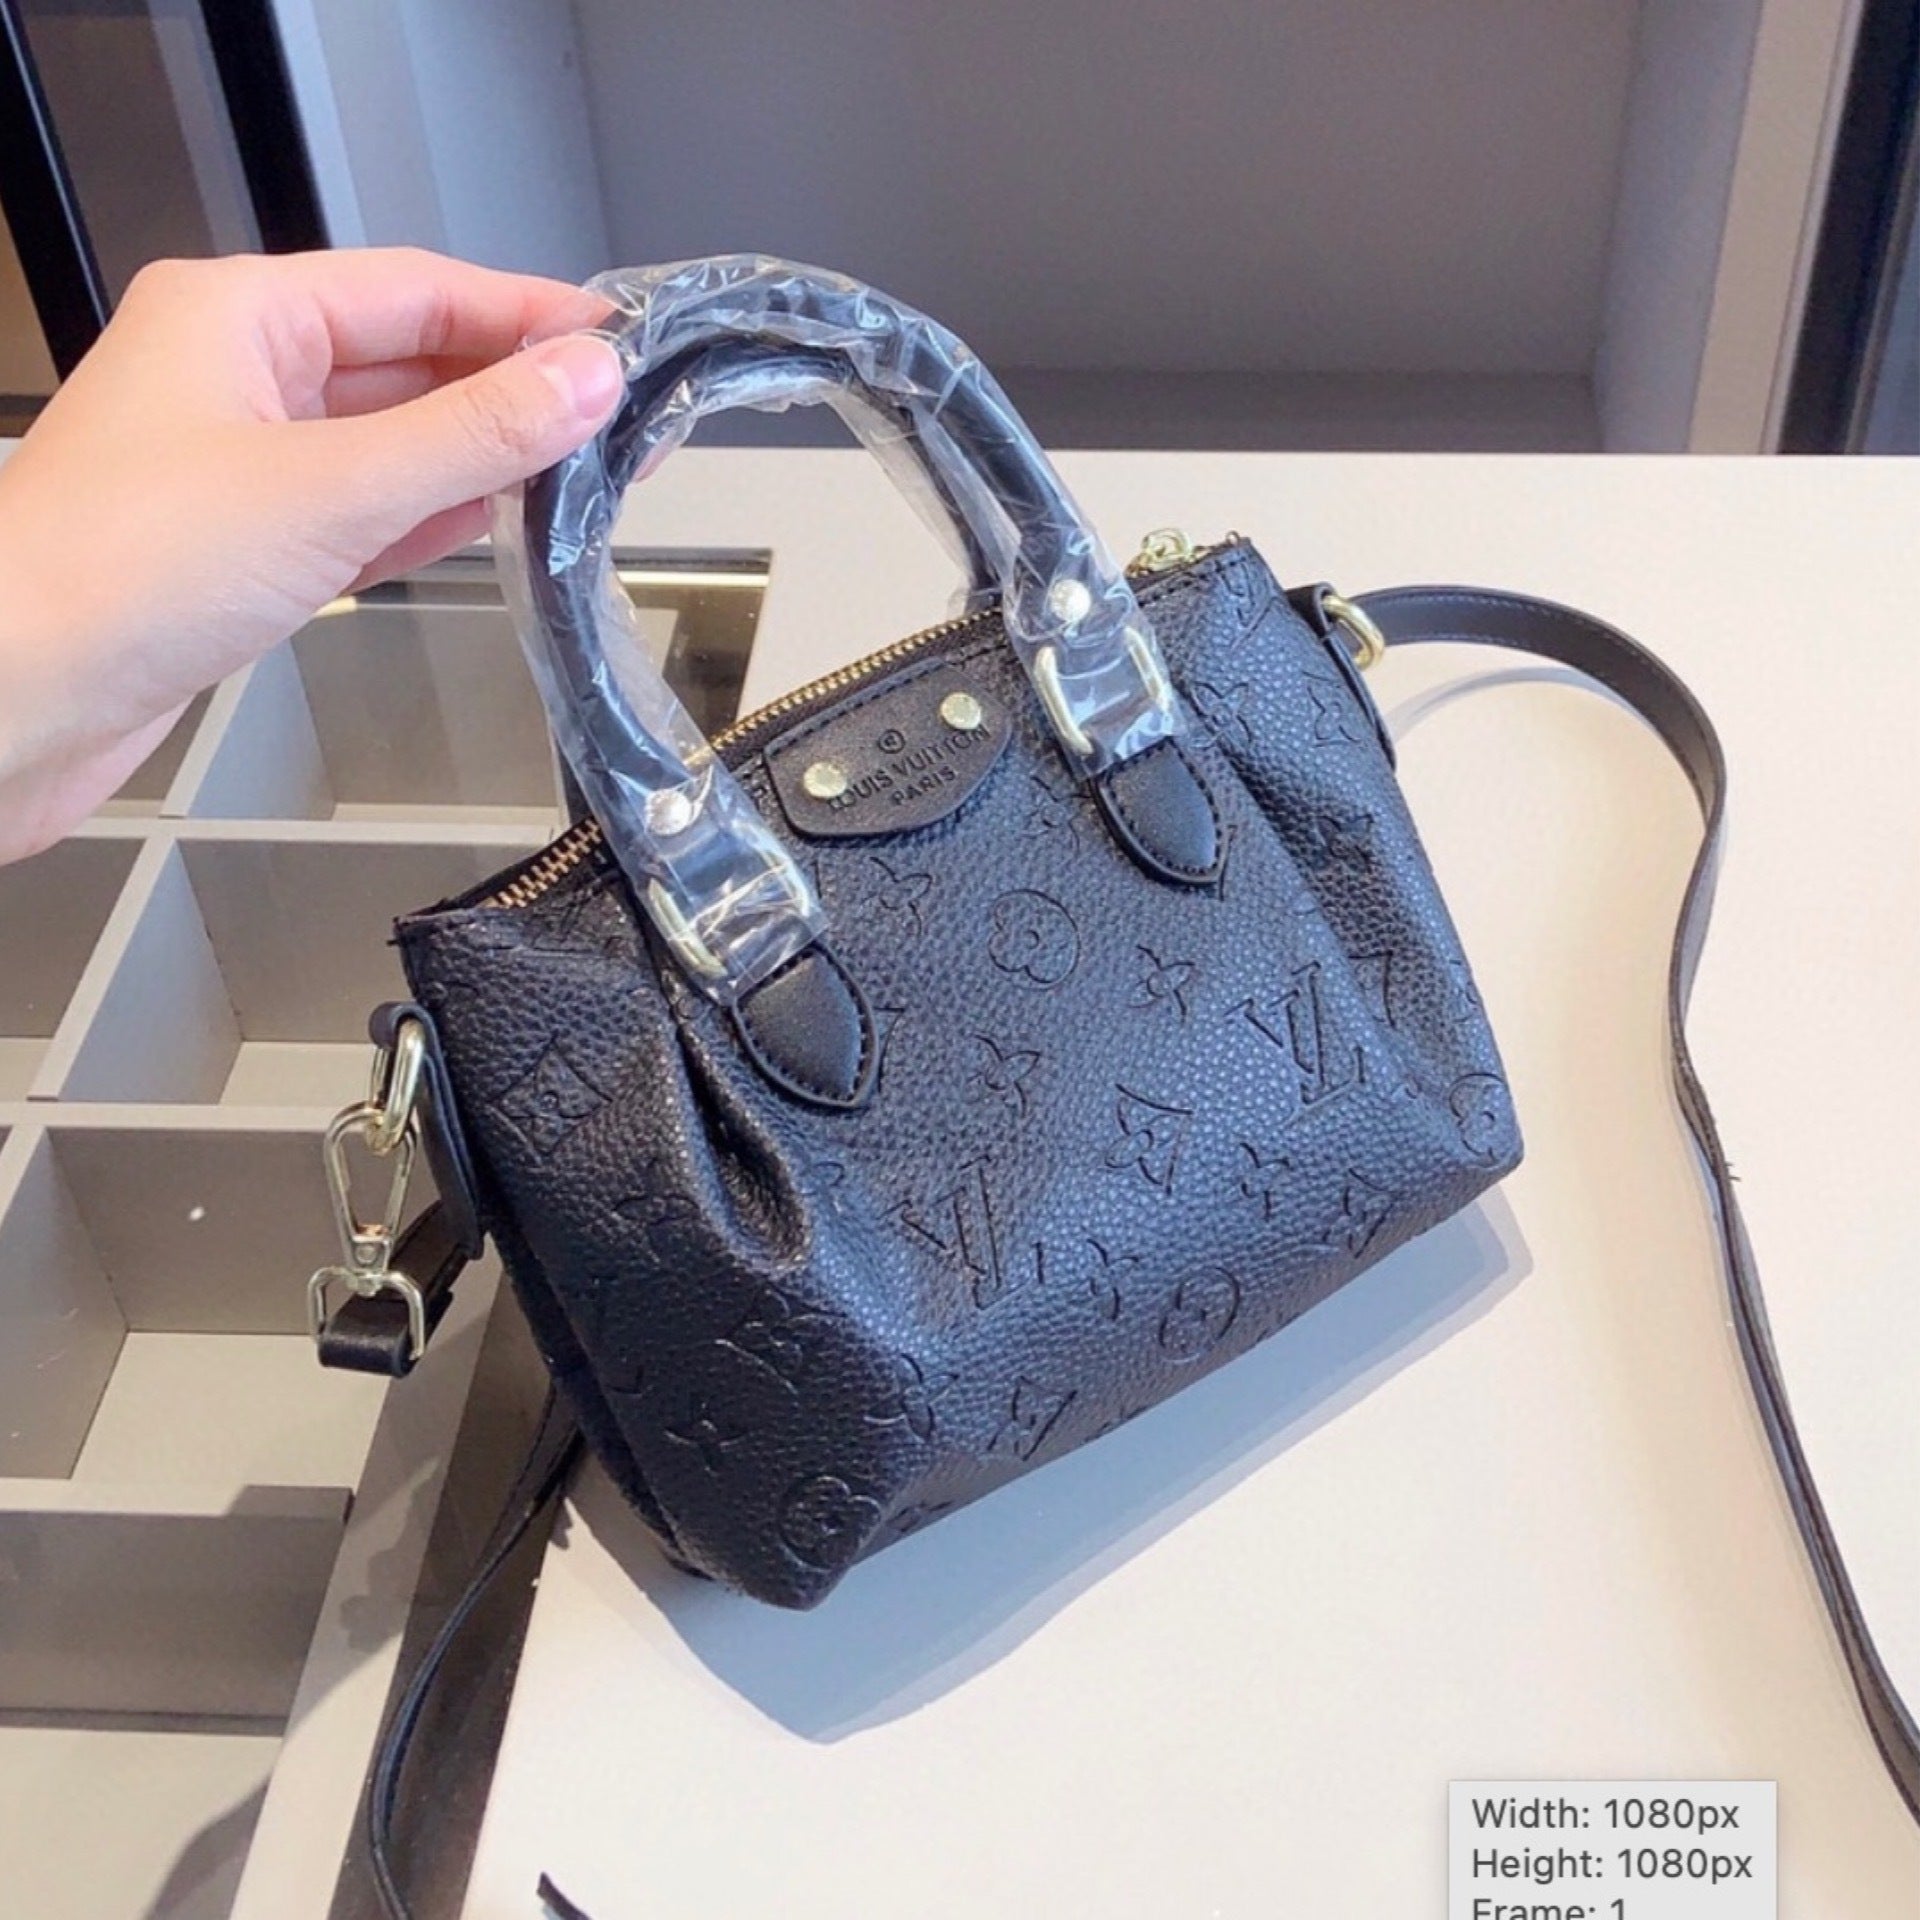 Best Louis Vuitton Designer Inspired Handbag for sale in Sumter